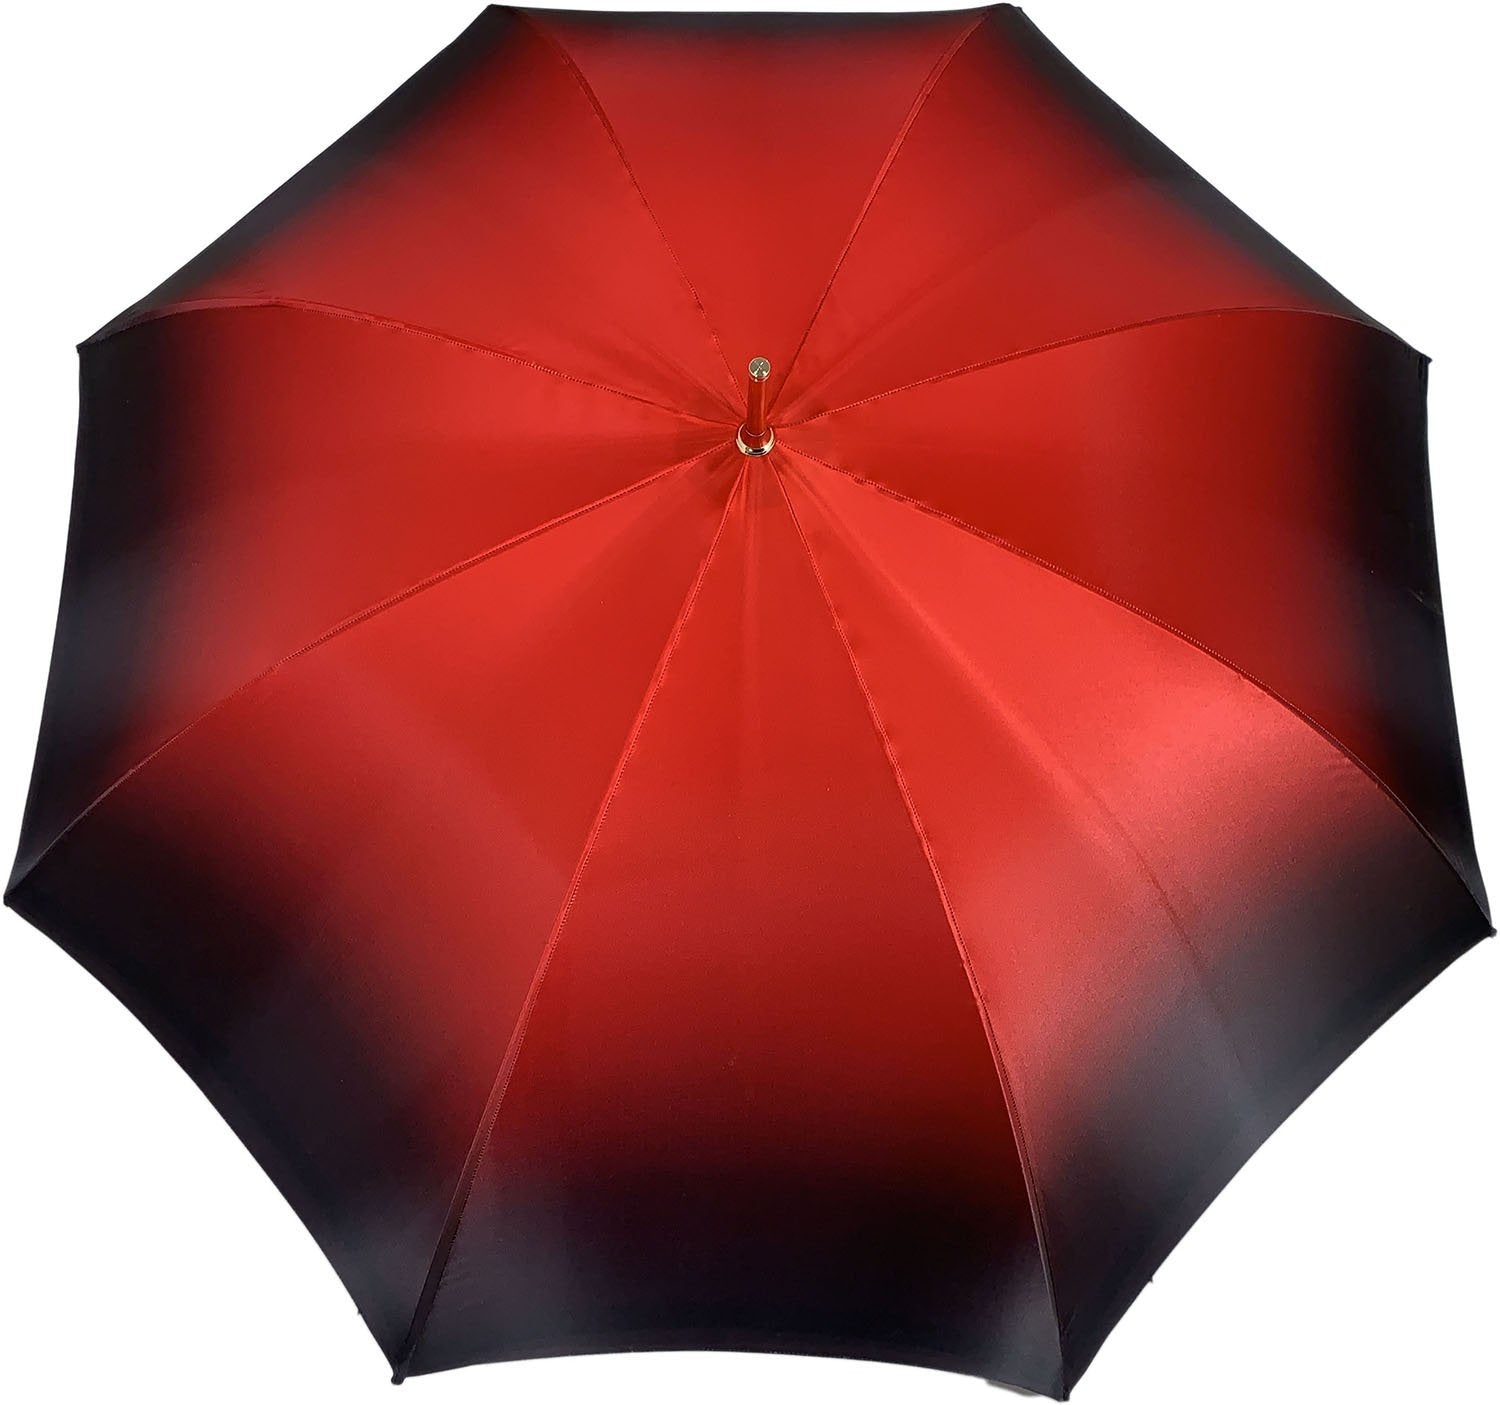 Wonderfull red Umbrella With Rose Design - il-marchesato